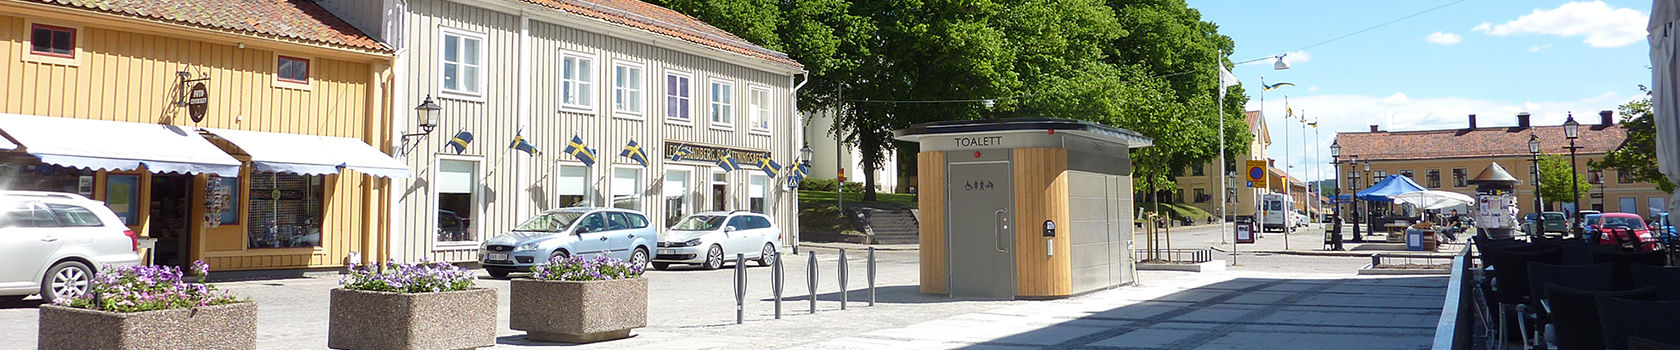 Hyrtoaletten acquires Nordic Toilet